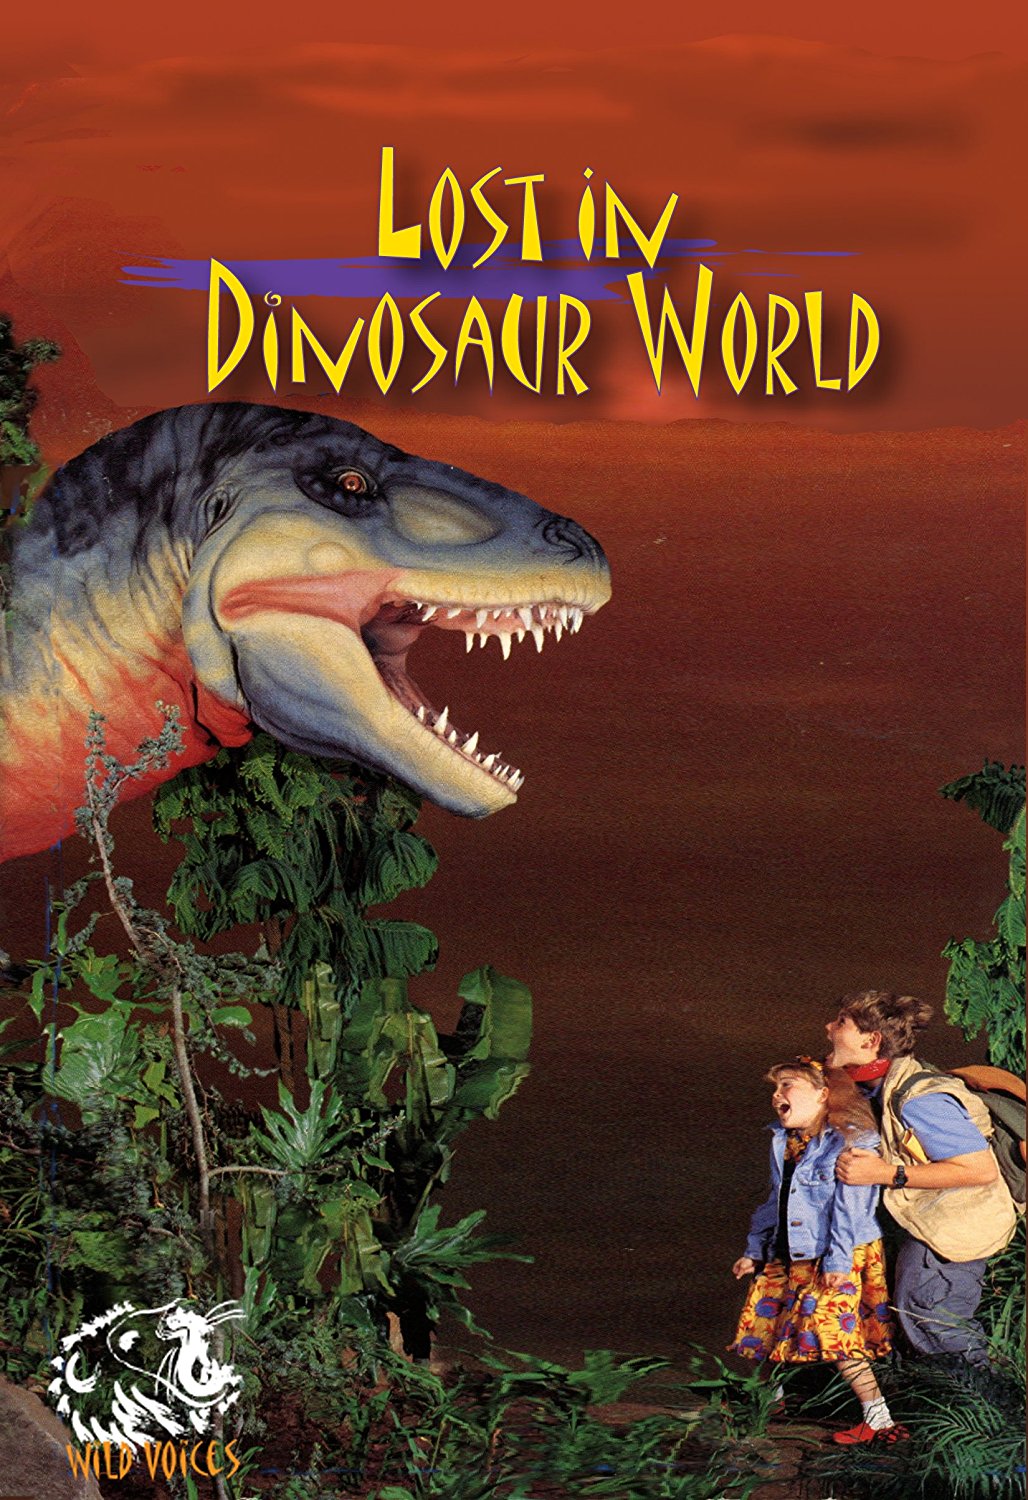 Lost in Dinosaur World (1993) Screenshot 1 